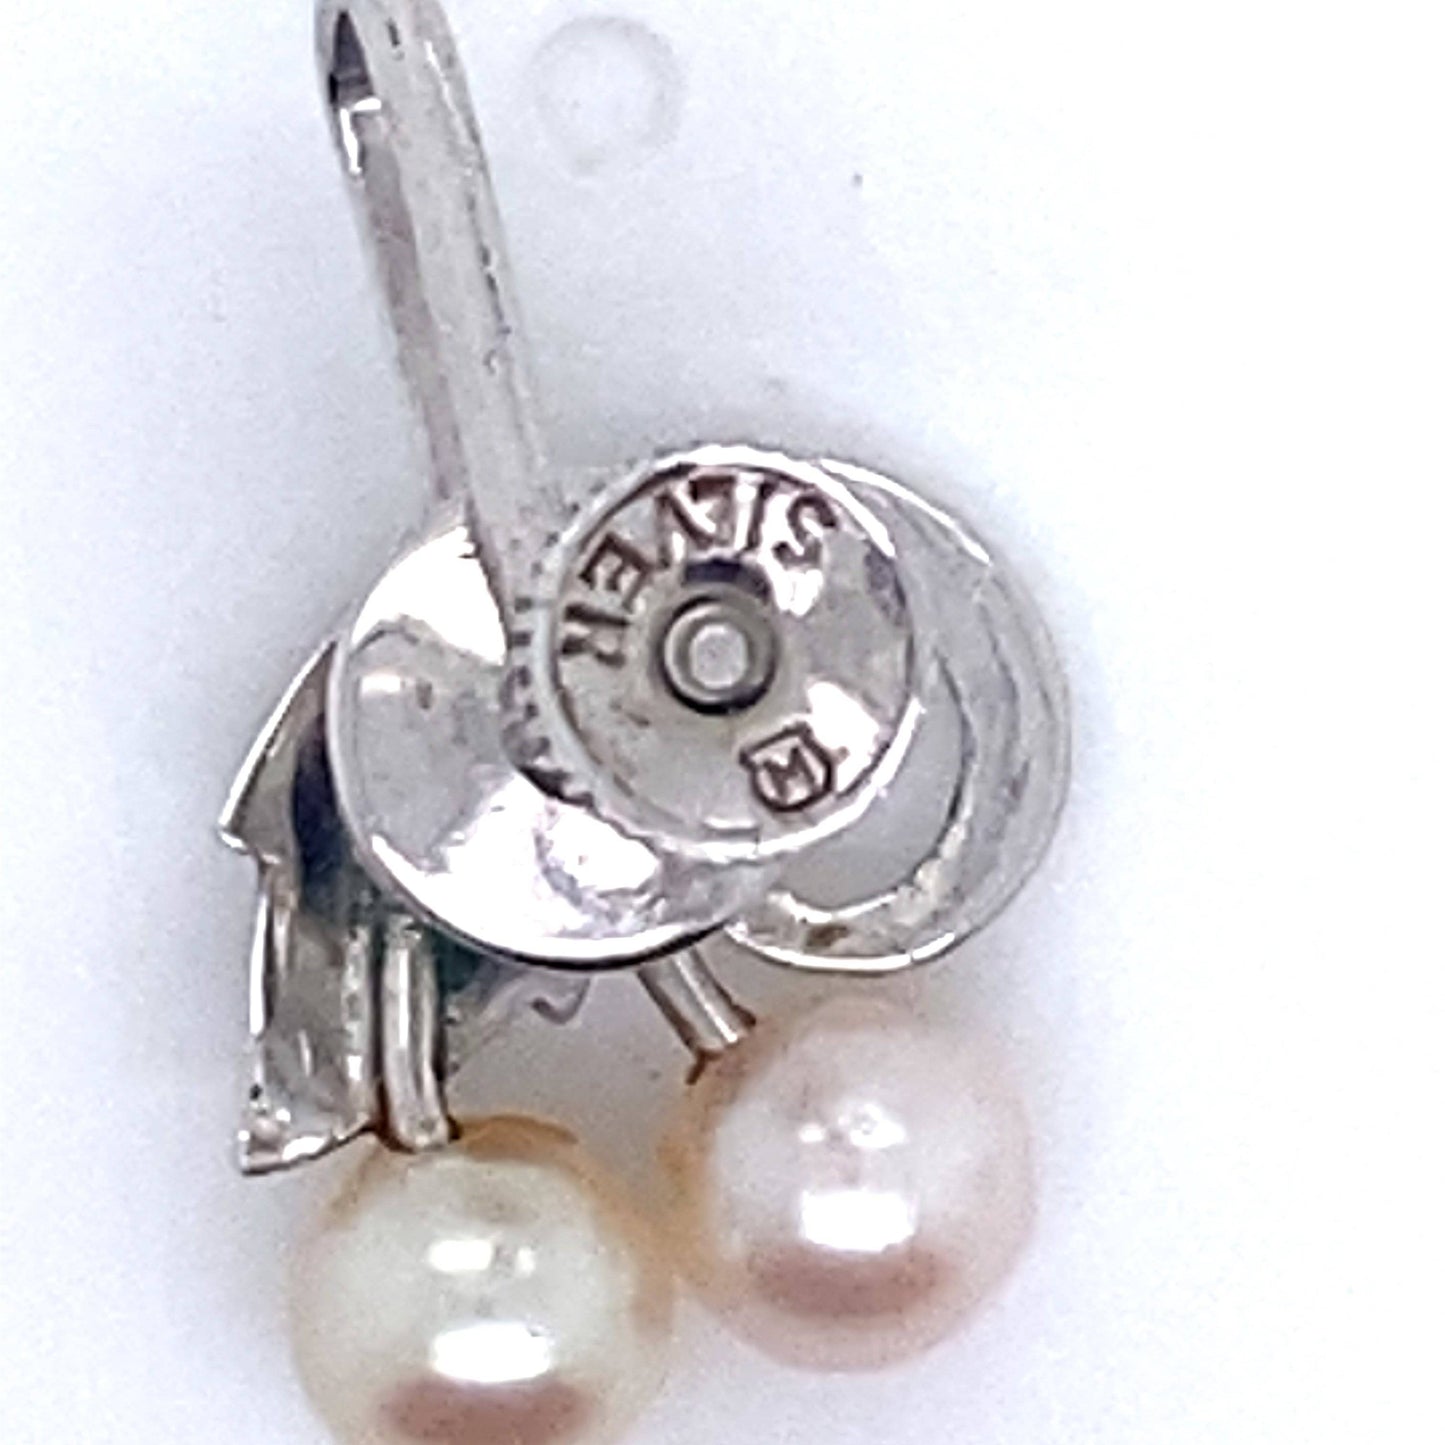 Mikimoto Estate Akoya Pearl Clip On Earrings Sterling Silver 4.94 mm M171 - Certified Estate Jewelry